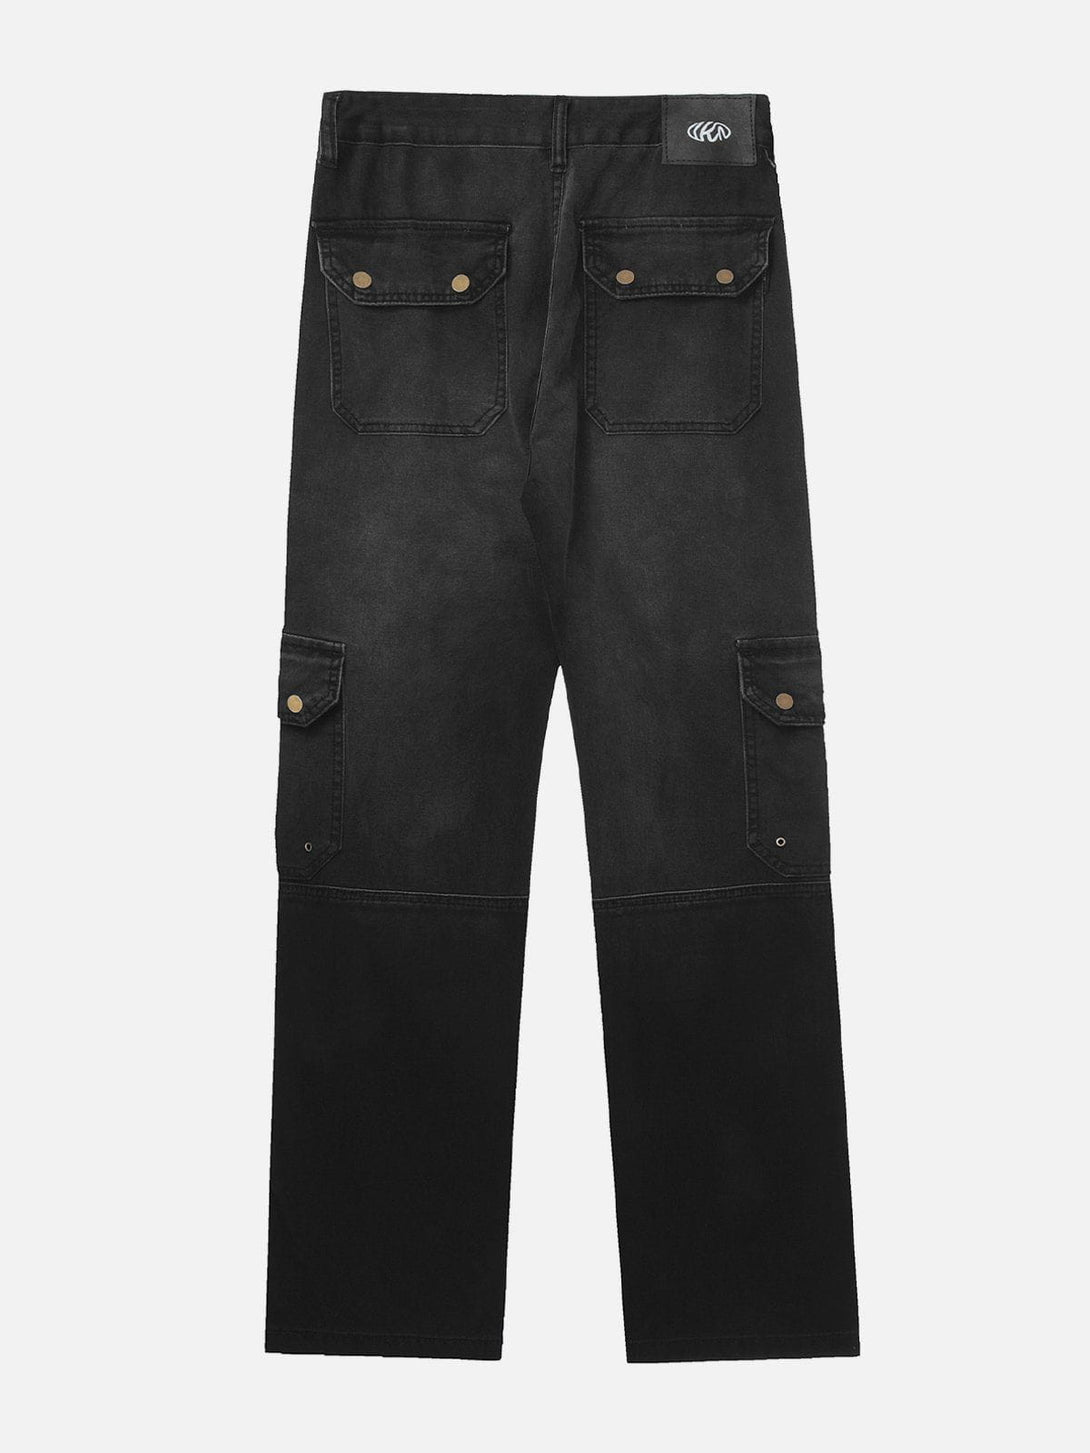 Levefly - Vintage Wash Gradient Jeans - Streetwear Fashion - levefly.com